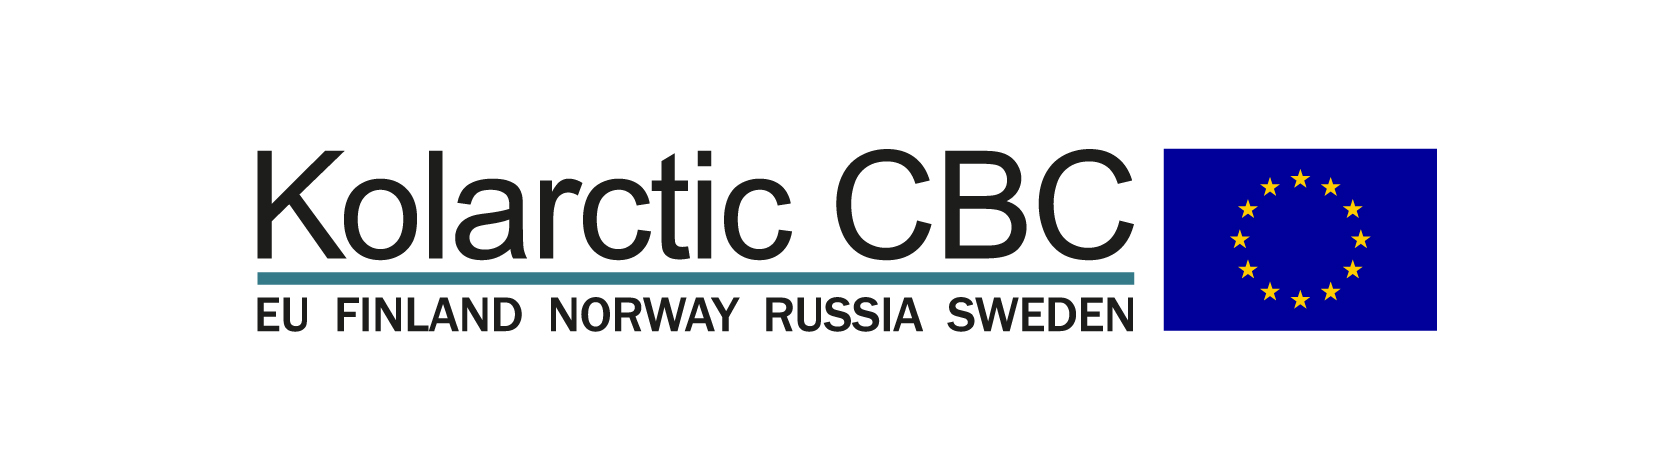 KolarcticCBC-logo_RGB.jpg